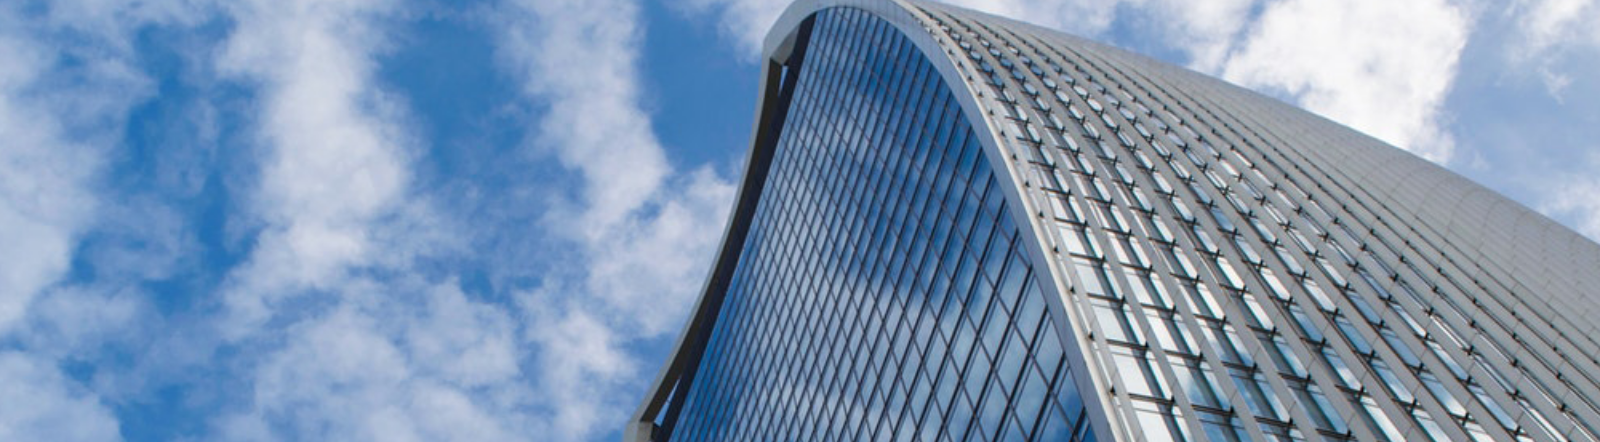 Surviving Volatile Markets Mitigating Lease Risk Commercial Building Skyline Image for The CCIM Institute